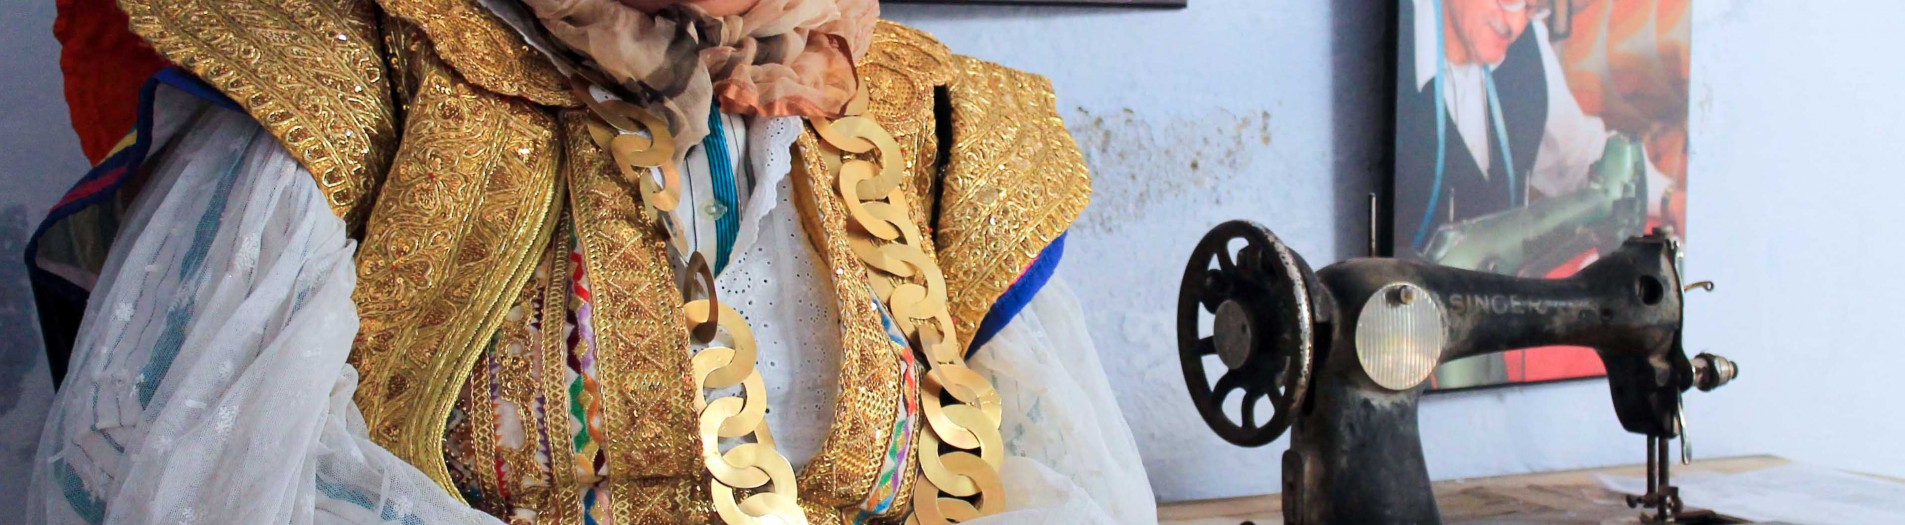 L’habit traditionnel féminin du Hammamet